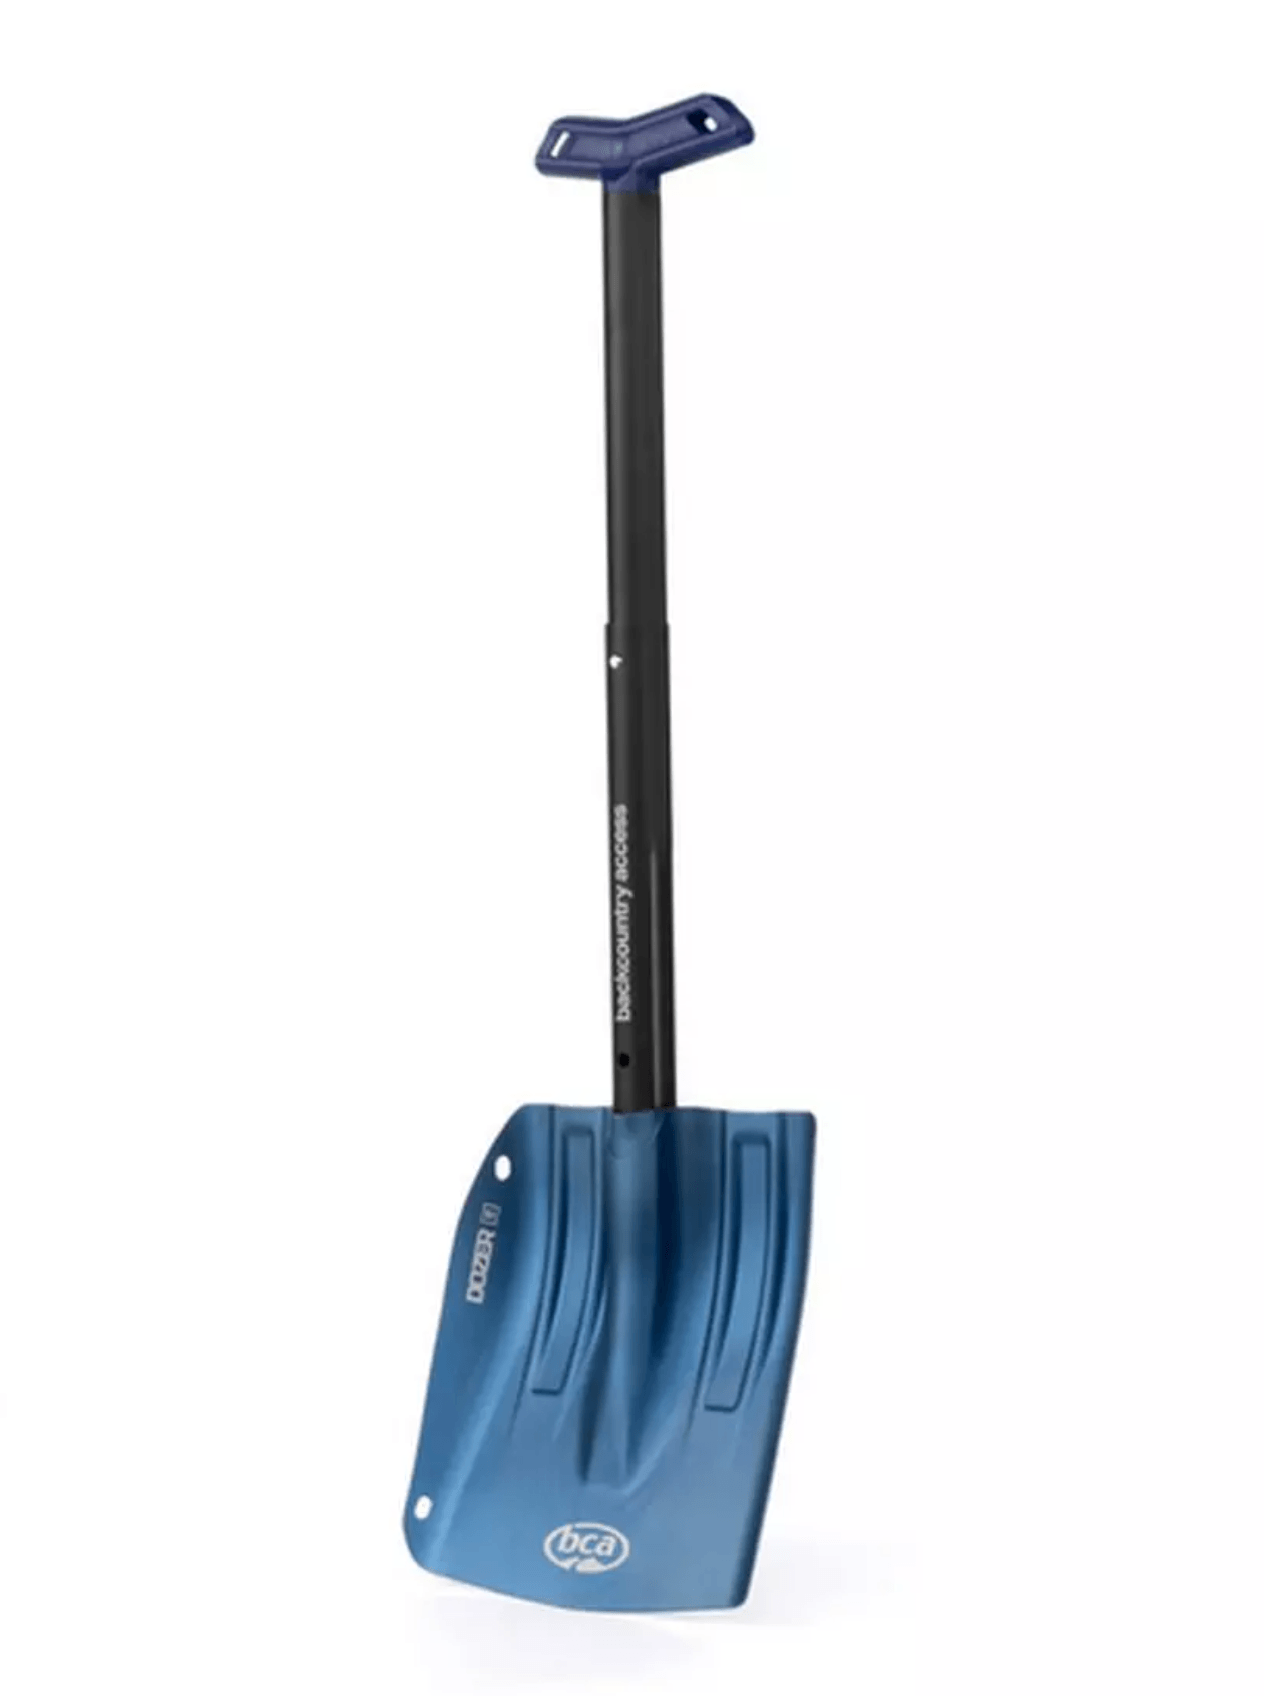 BCA Dozer 1T Avalanche Shovel Blue Backcountry Shovels BCA - Backcountry Access 